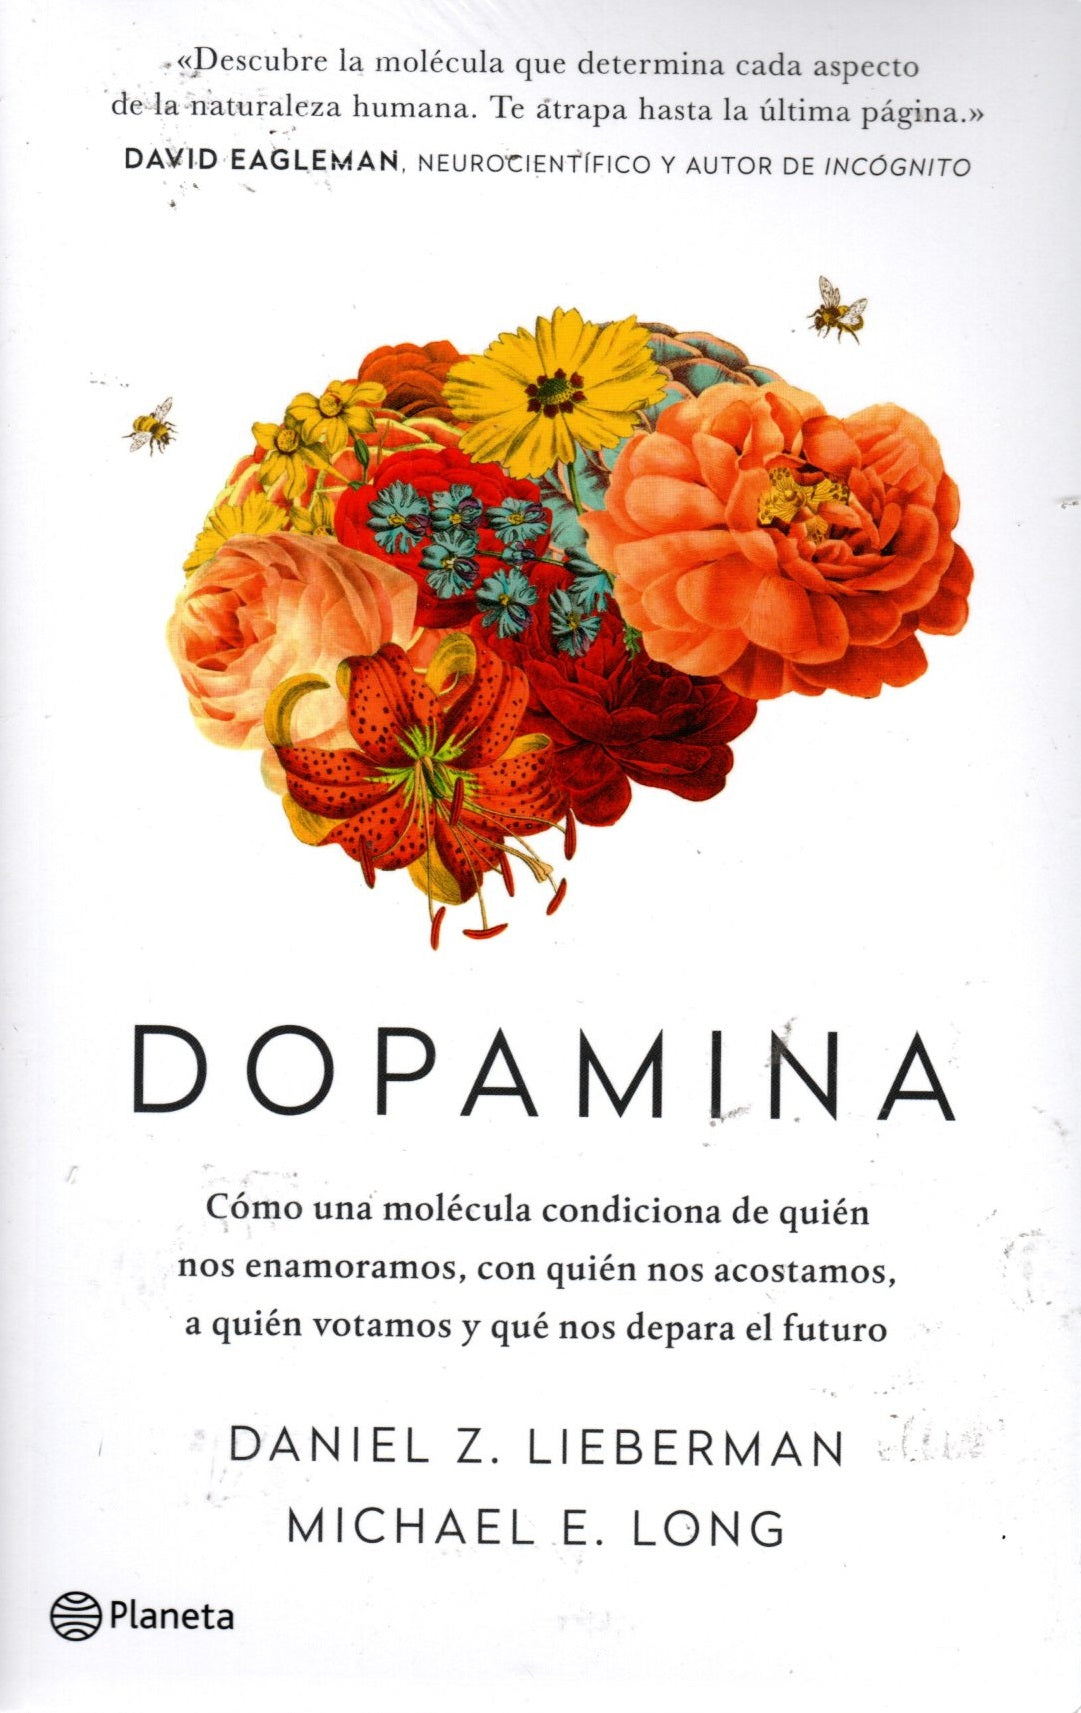 Libro Daniel Z. Lieberman - Dopamina